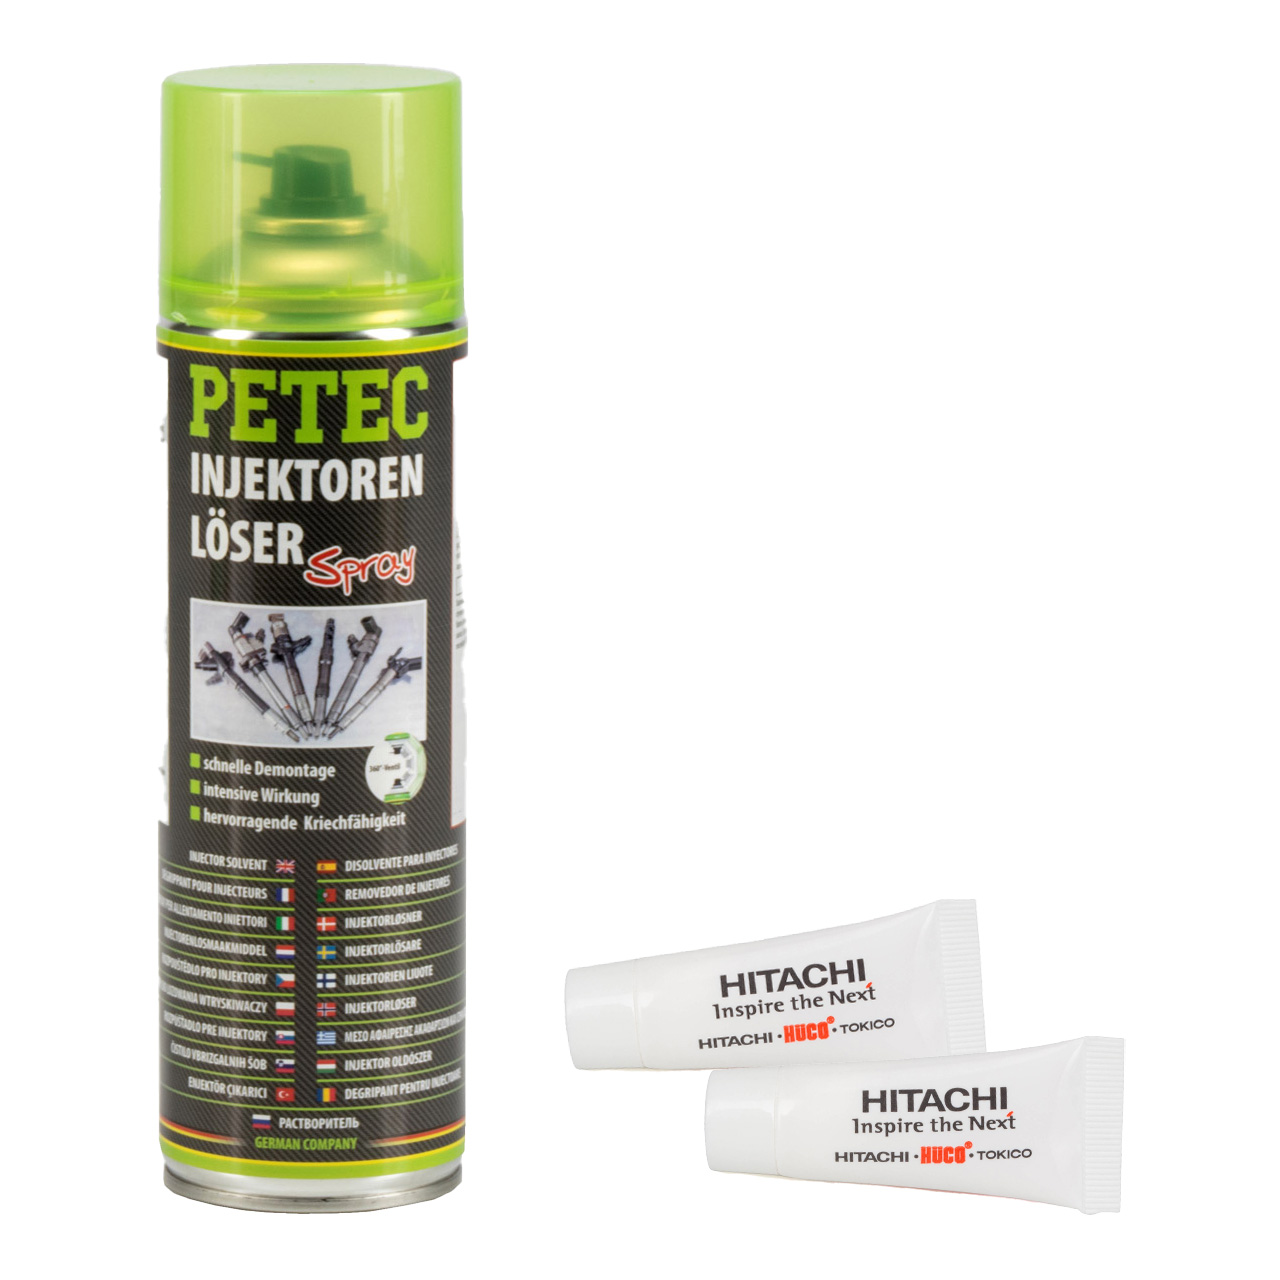 500ml PETEC Injektorenlöser Zündkerzen Glühkerzenlöser Sprühdose + 20g Kerzenfett